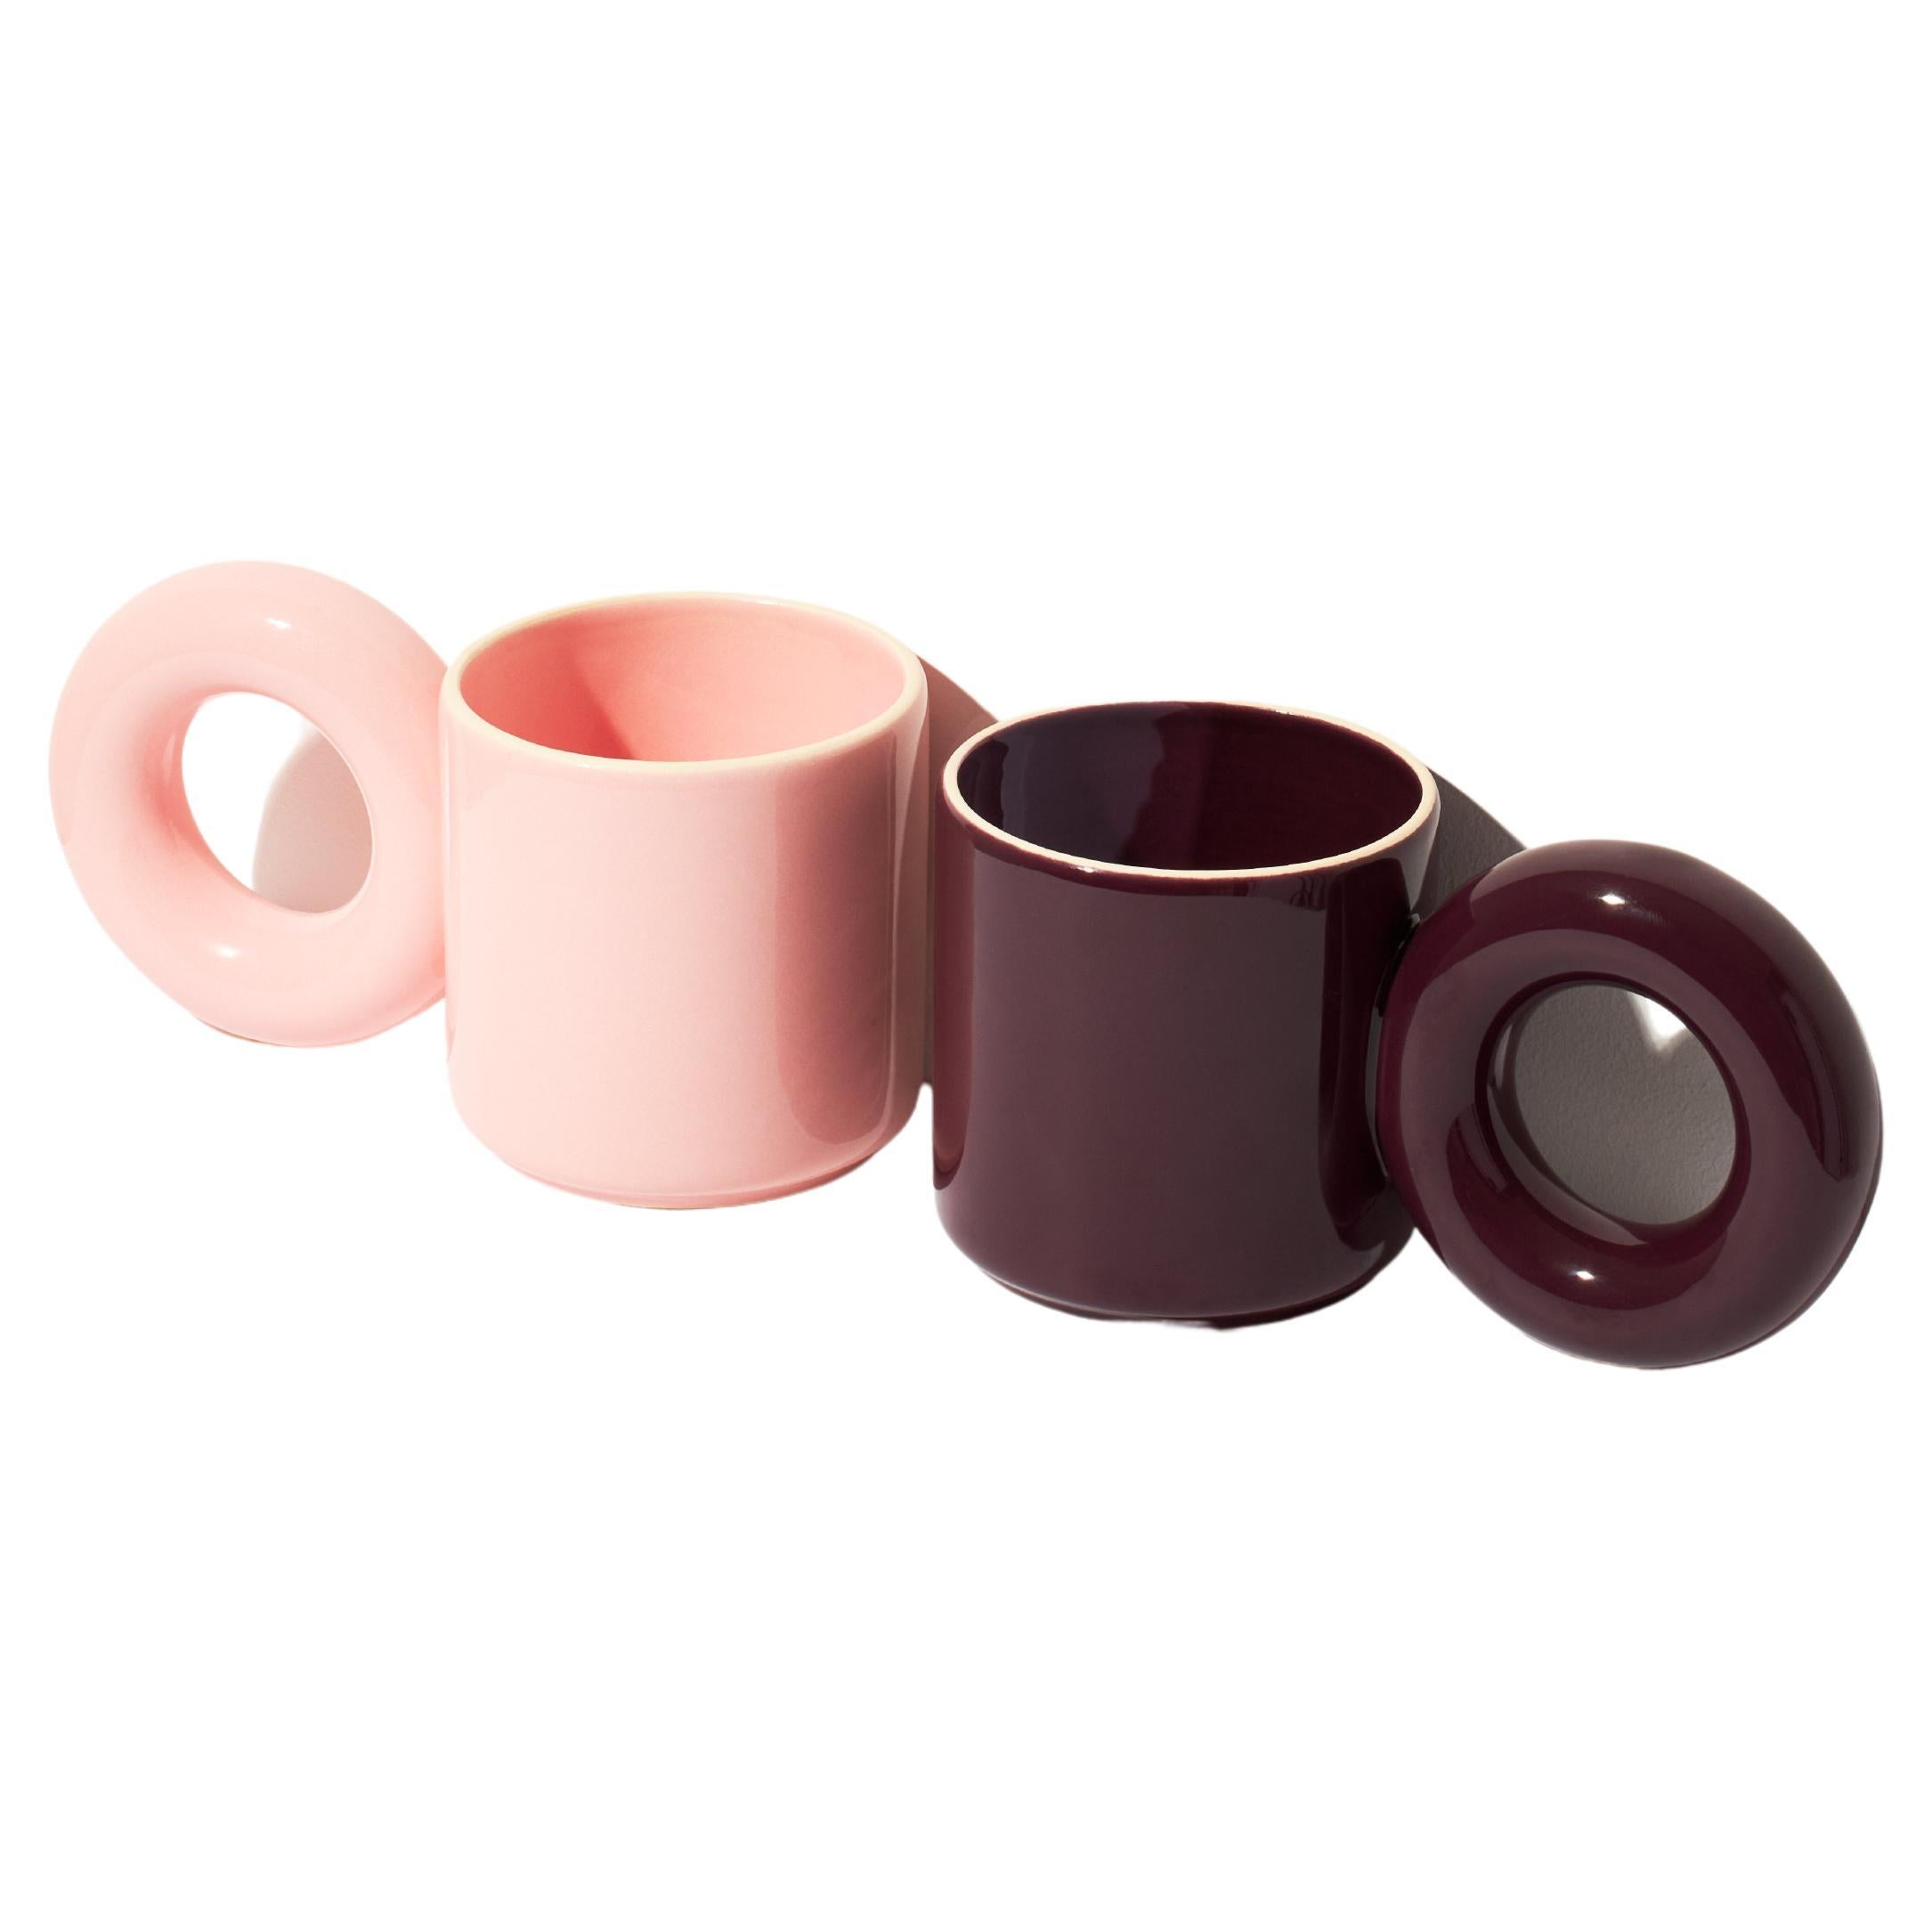 UCHO Mug / Candy / Plum / set of 2 by Malwina Konopacka